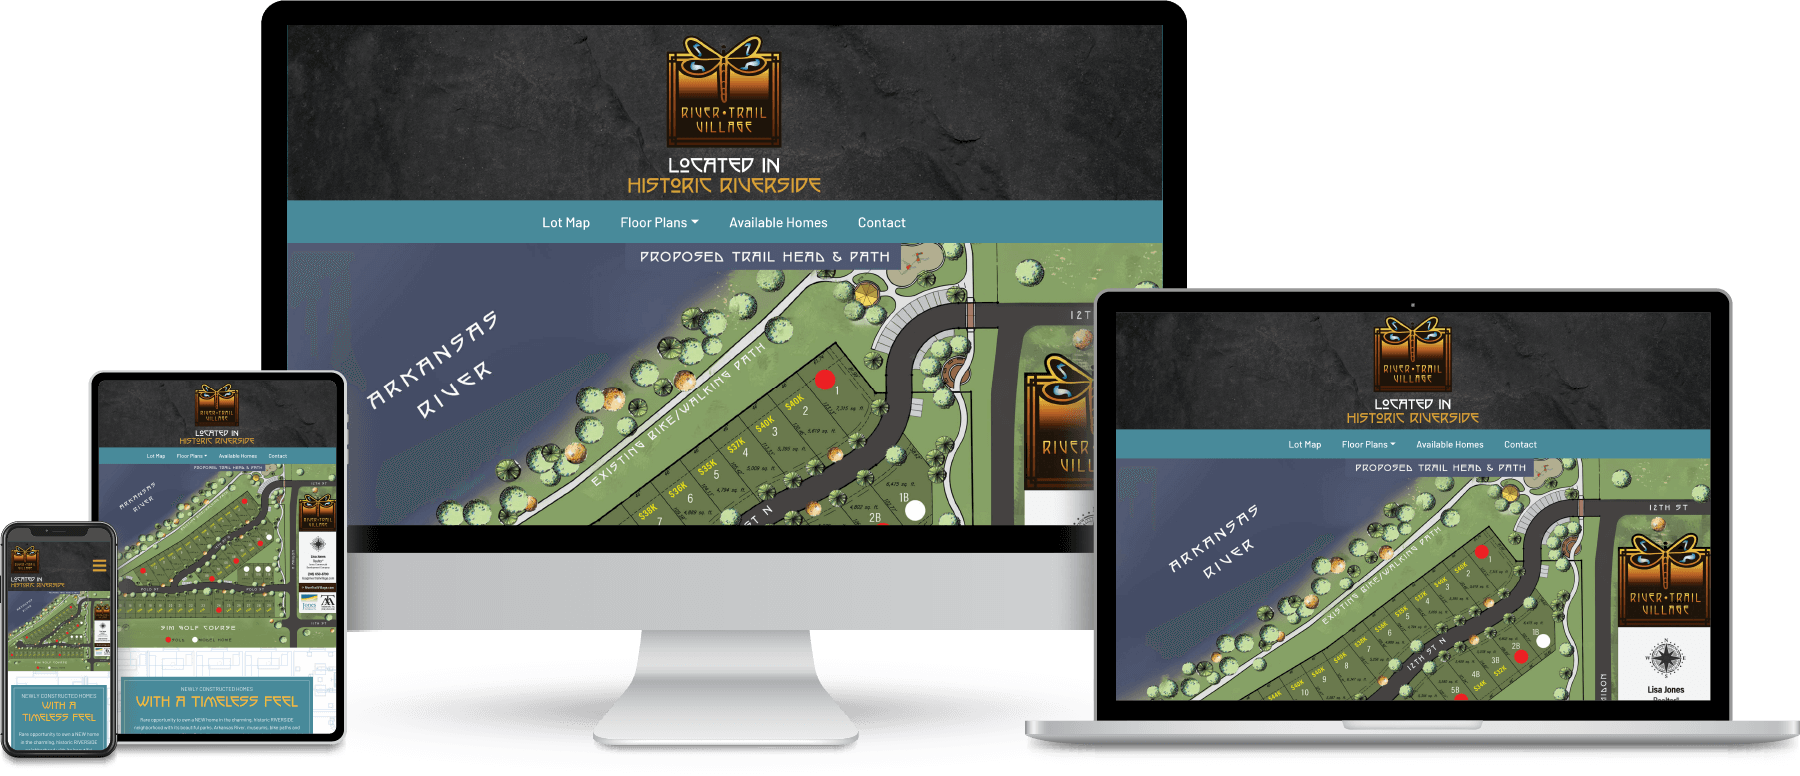 River Trail Village website shown on desktop, laptop, tablet and mobile devices.